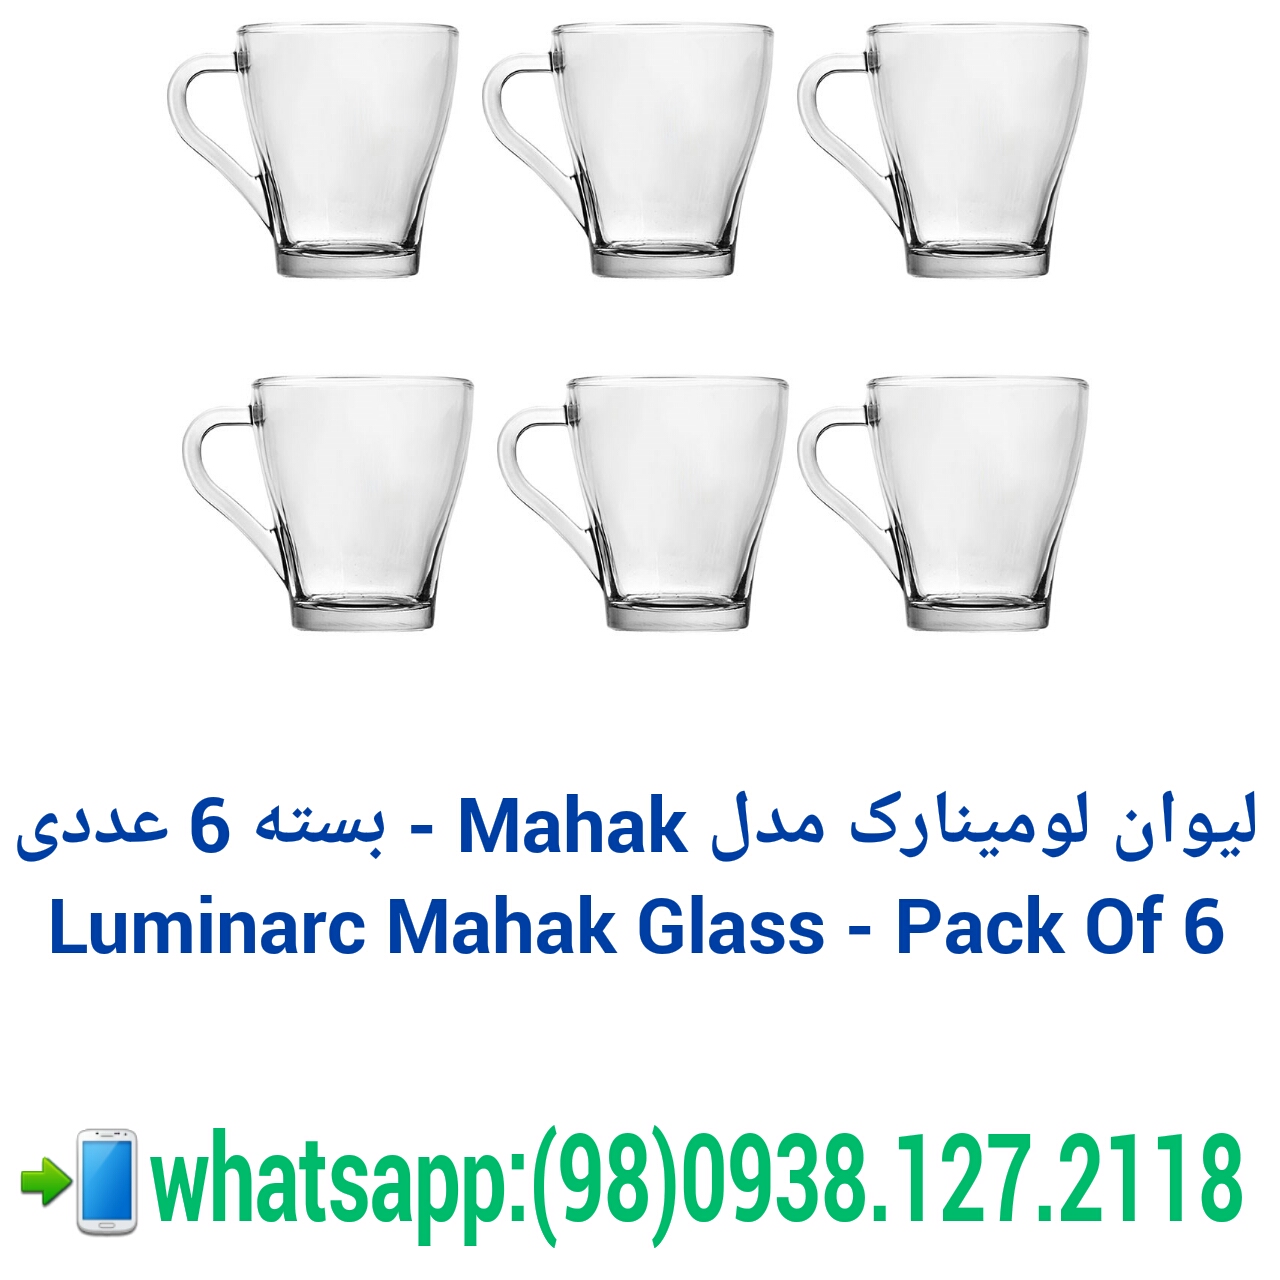 buy french luminarc glassware, luminarc,party glassware, پخش لیوان لومینارک,    لیوان لومینارک مدل Mahak - بسته 6 عددی,  Luminarc Mahak Glass Pack Of 6        